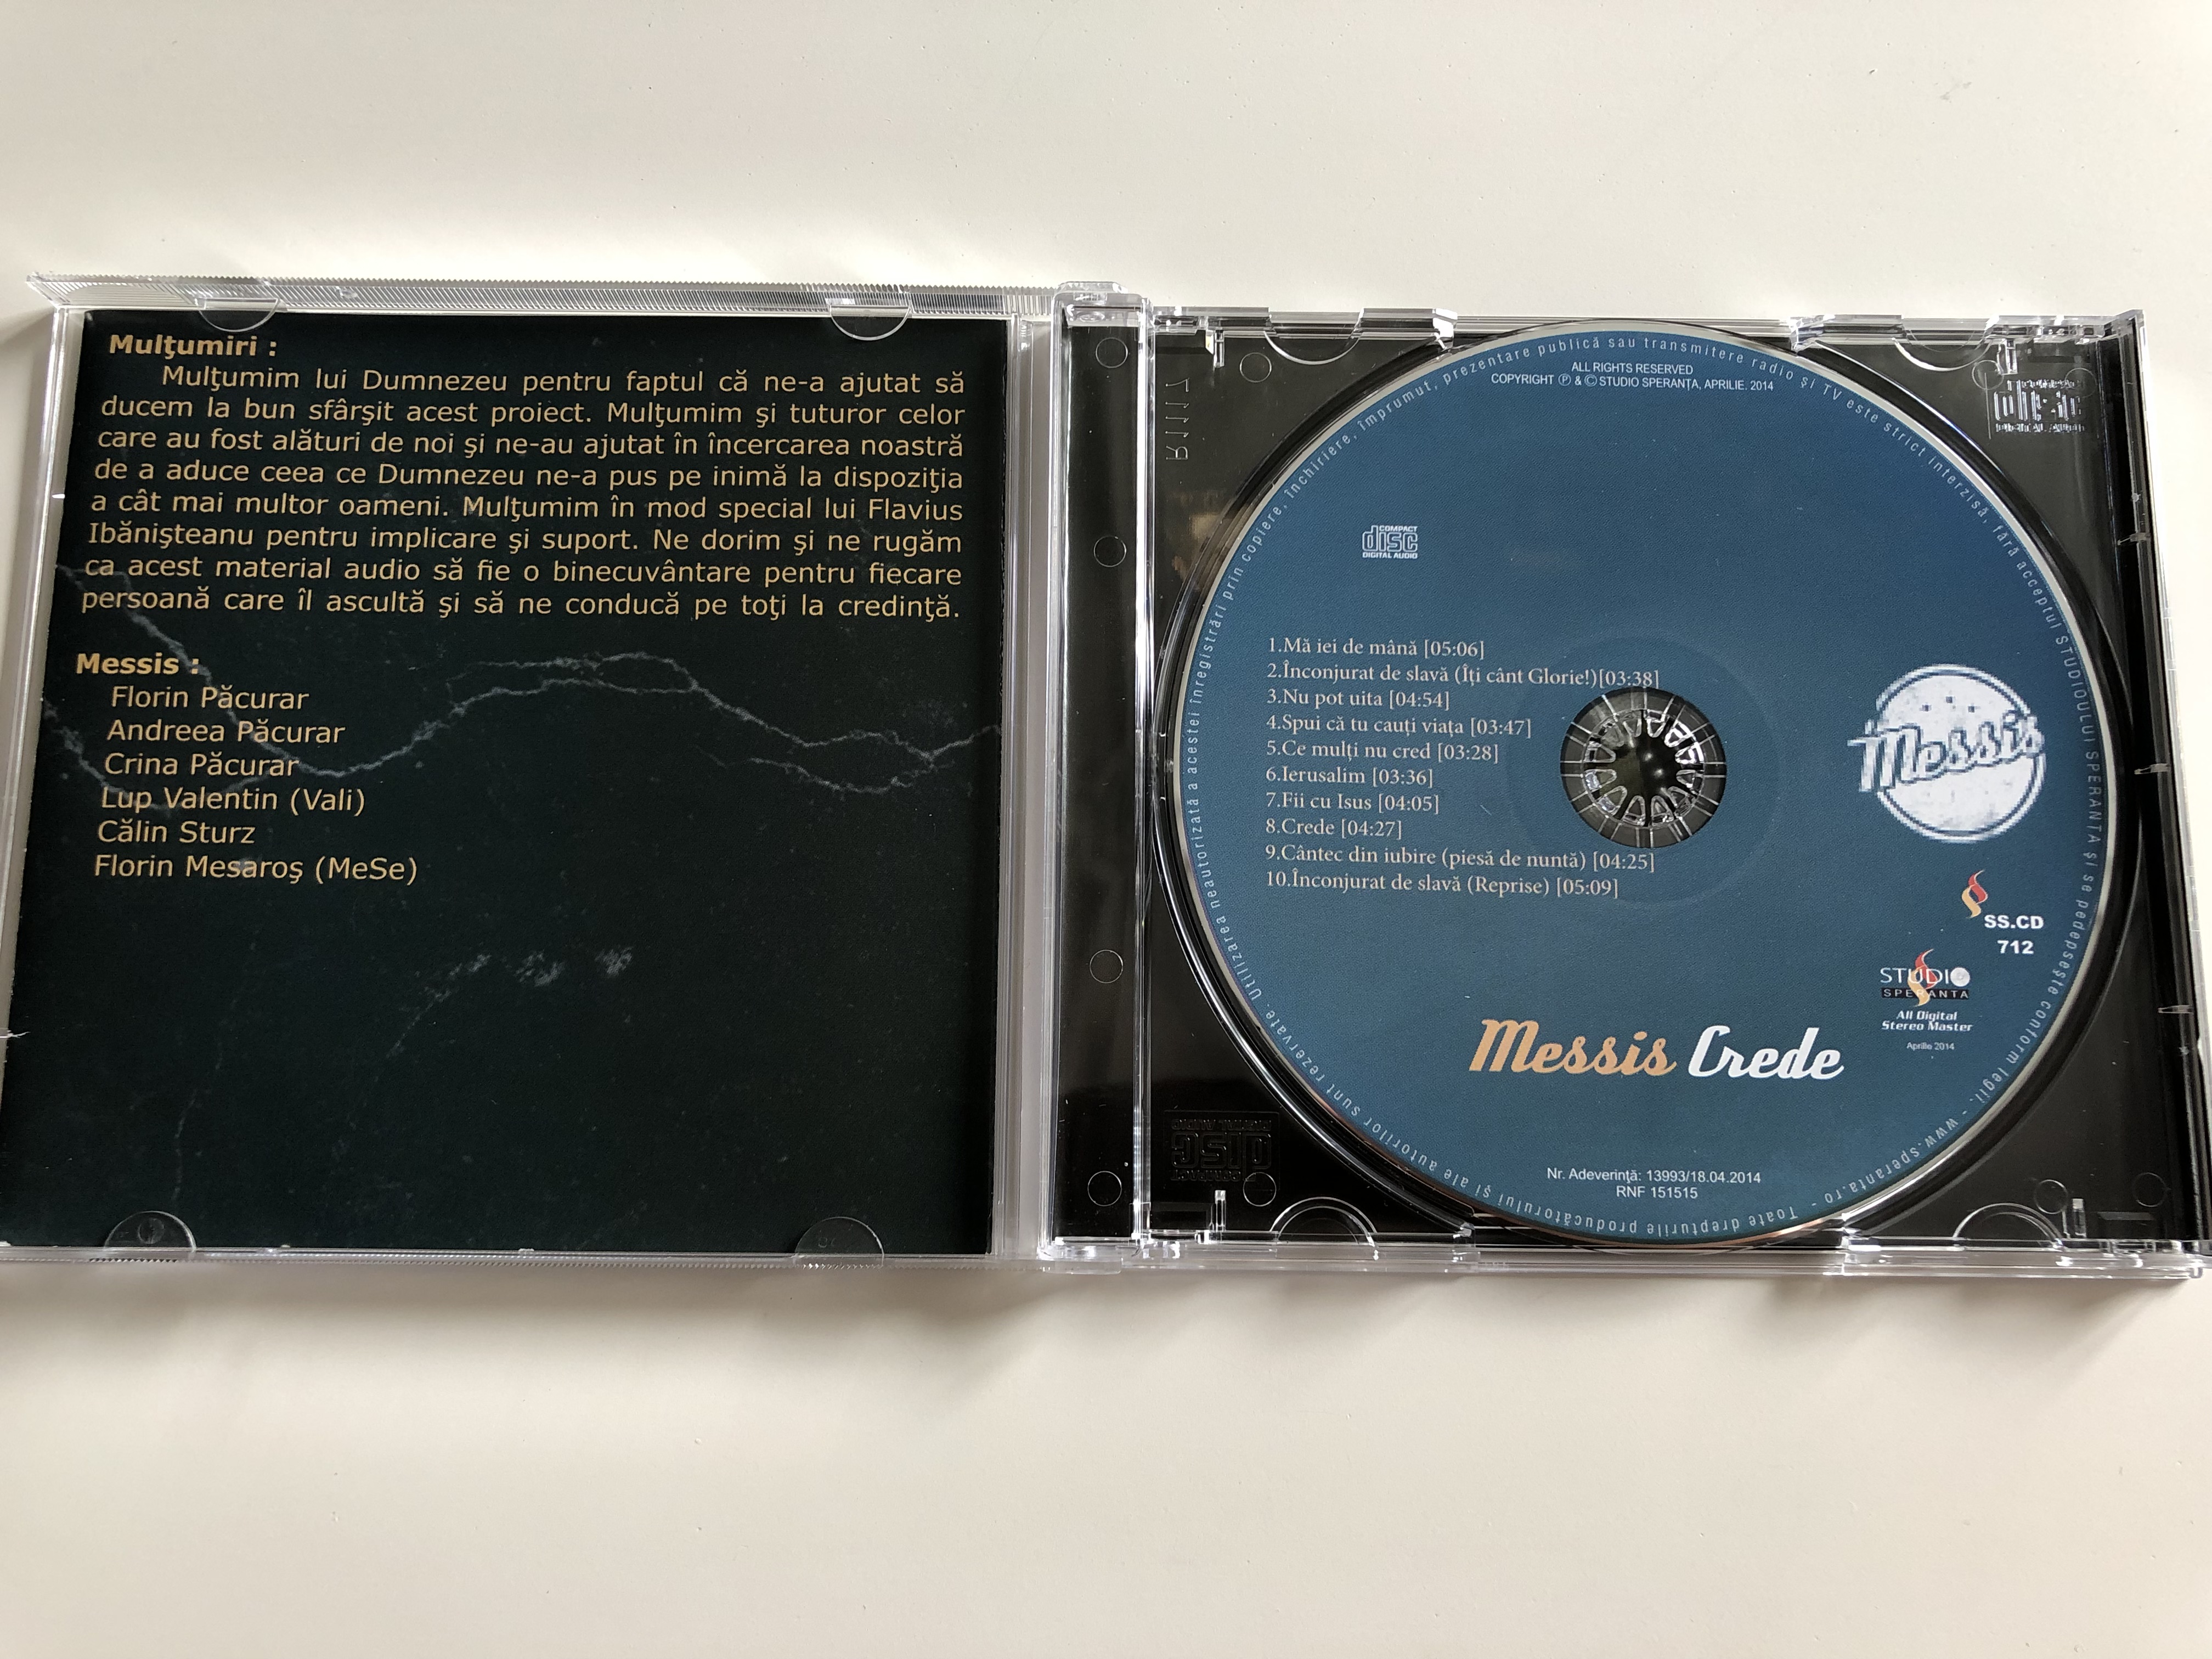 crede-messis-romanian-christian-worship-music-audio-cd-2014-ss.cd-712-5-.jpg